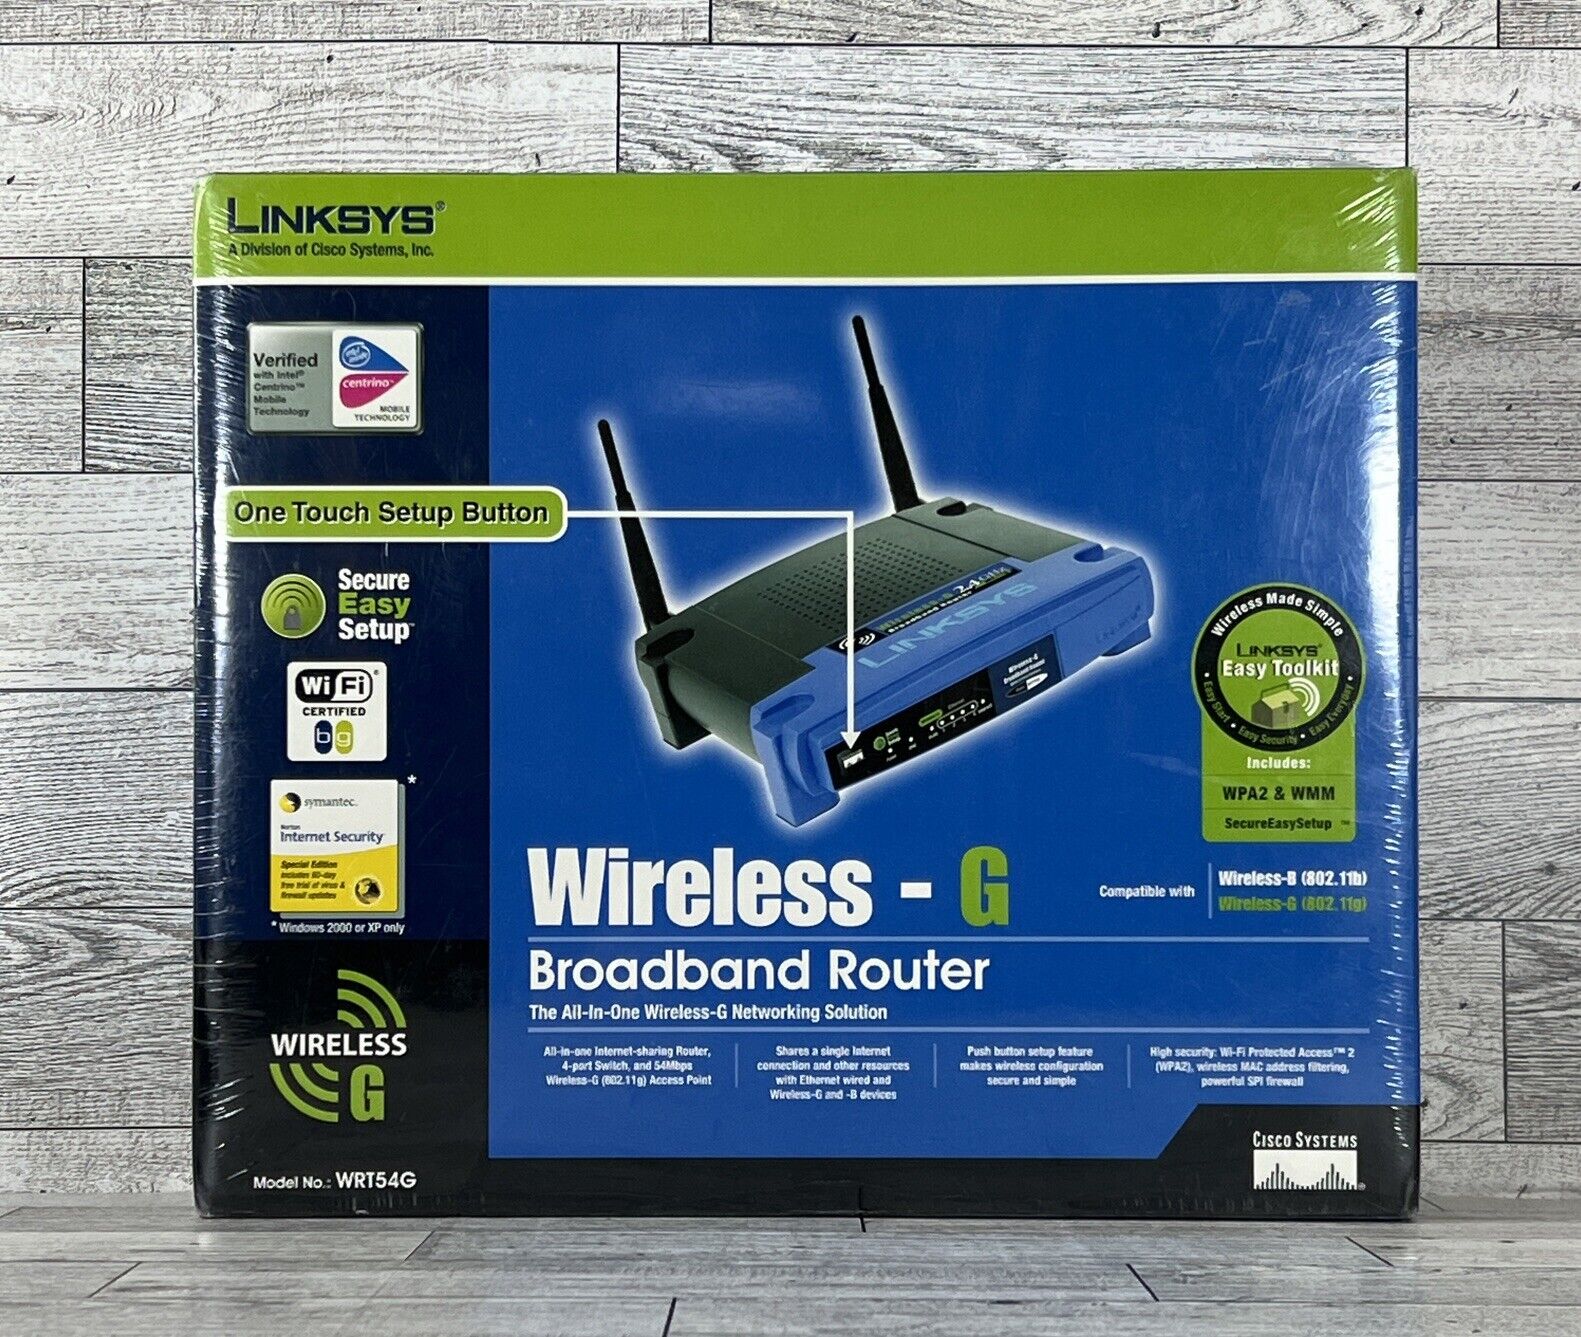 Linksys Wireless-G Broadband Router 2.4 GHz 4-Port Model WRT54G New Sealed